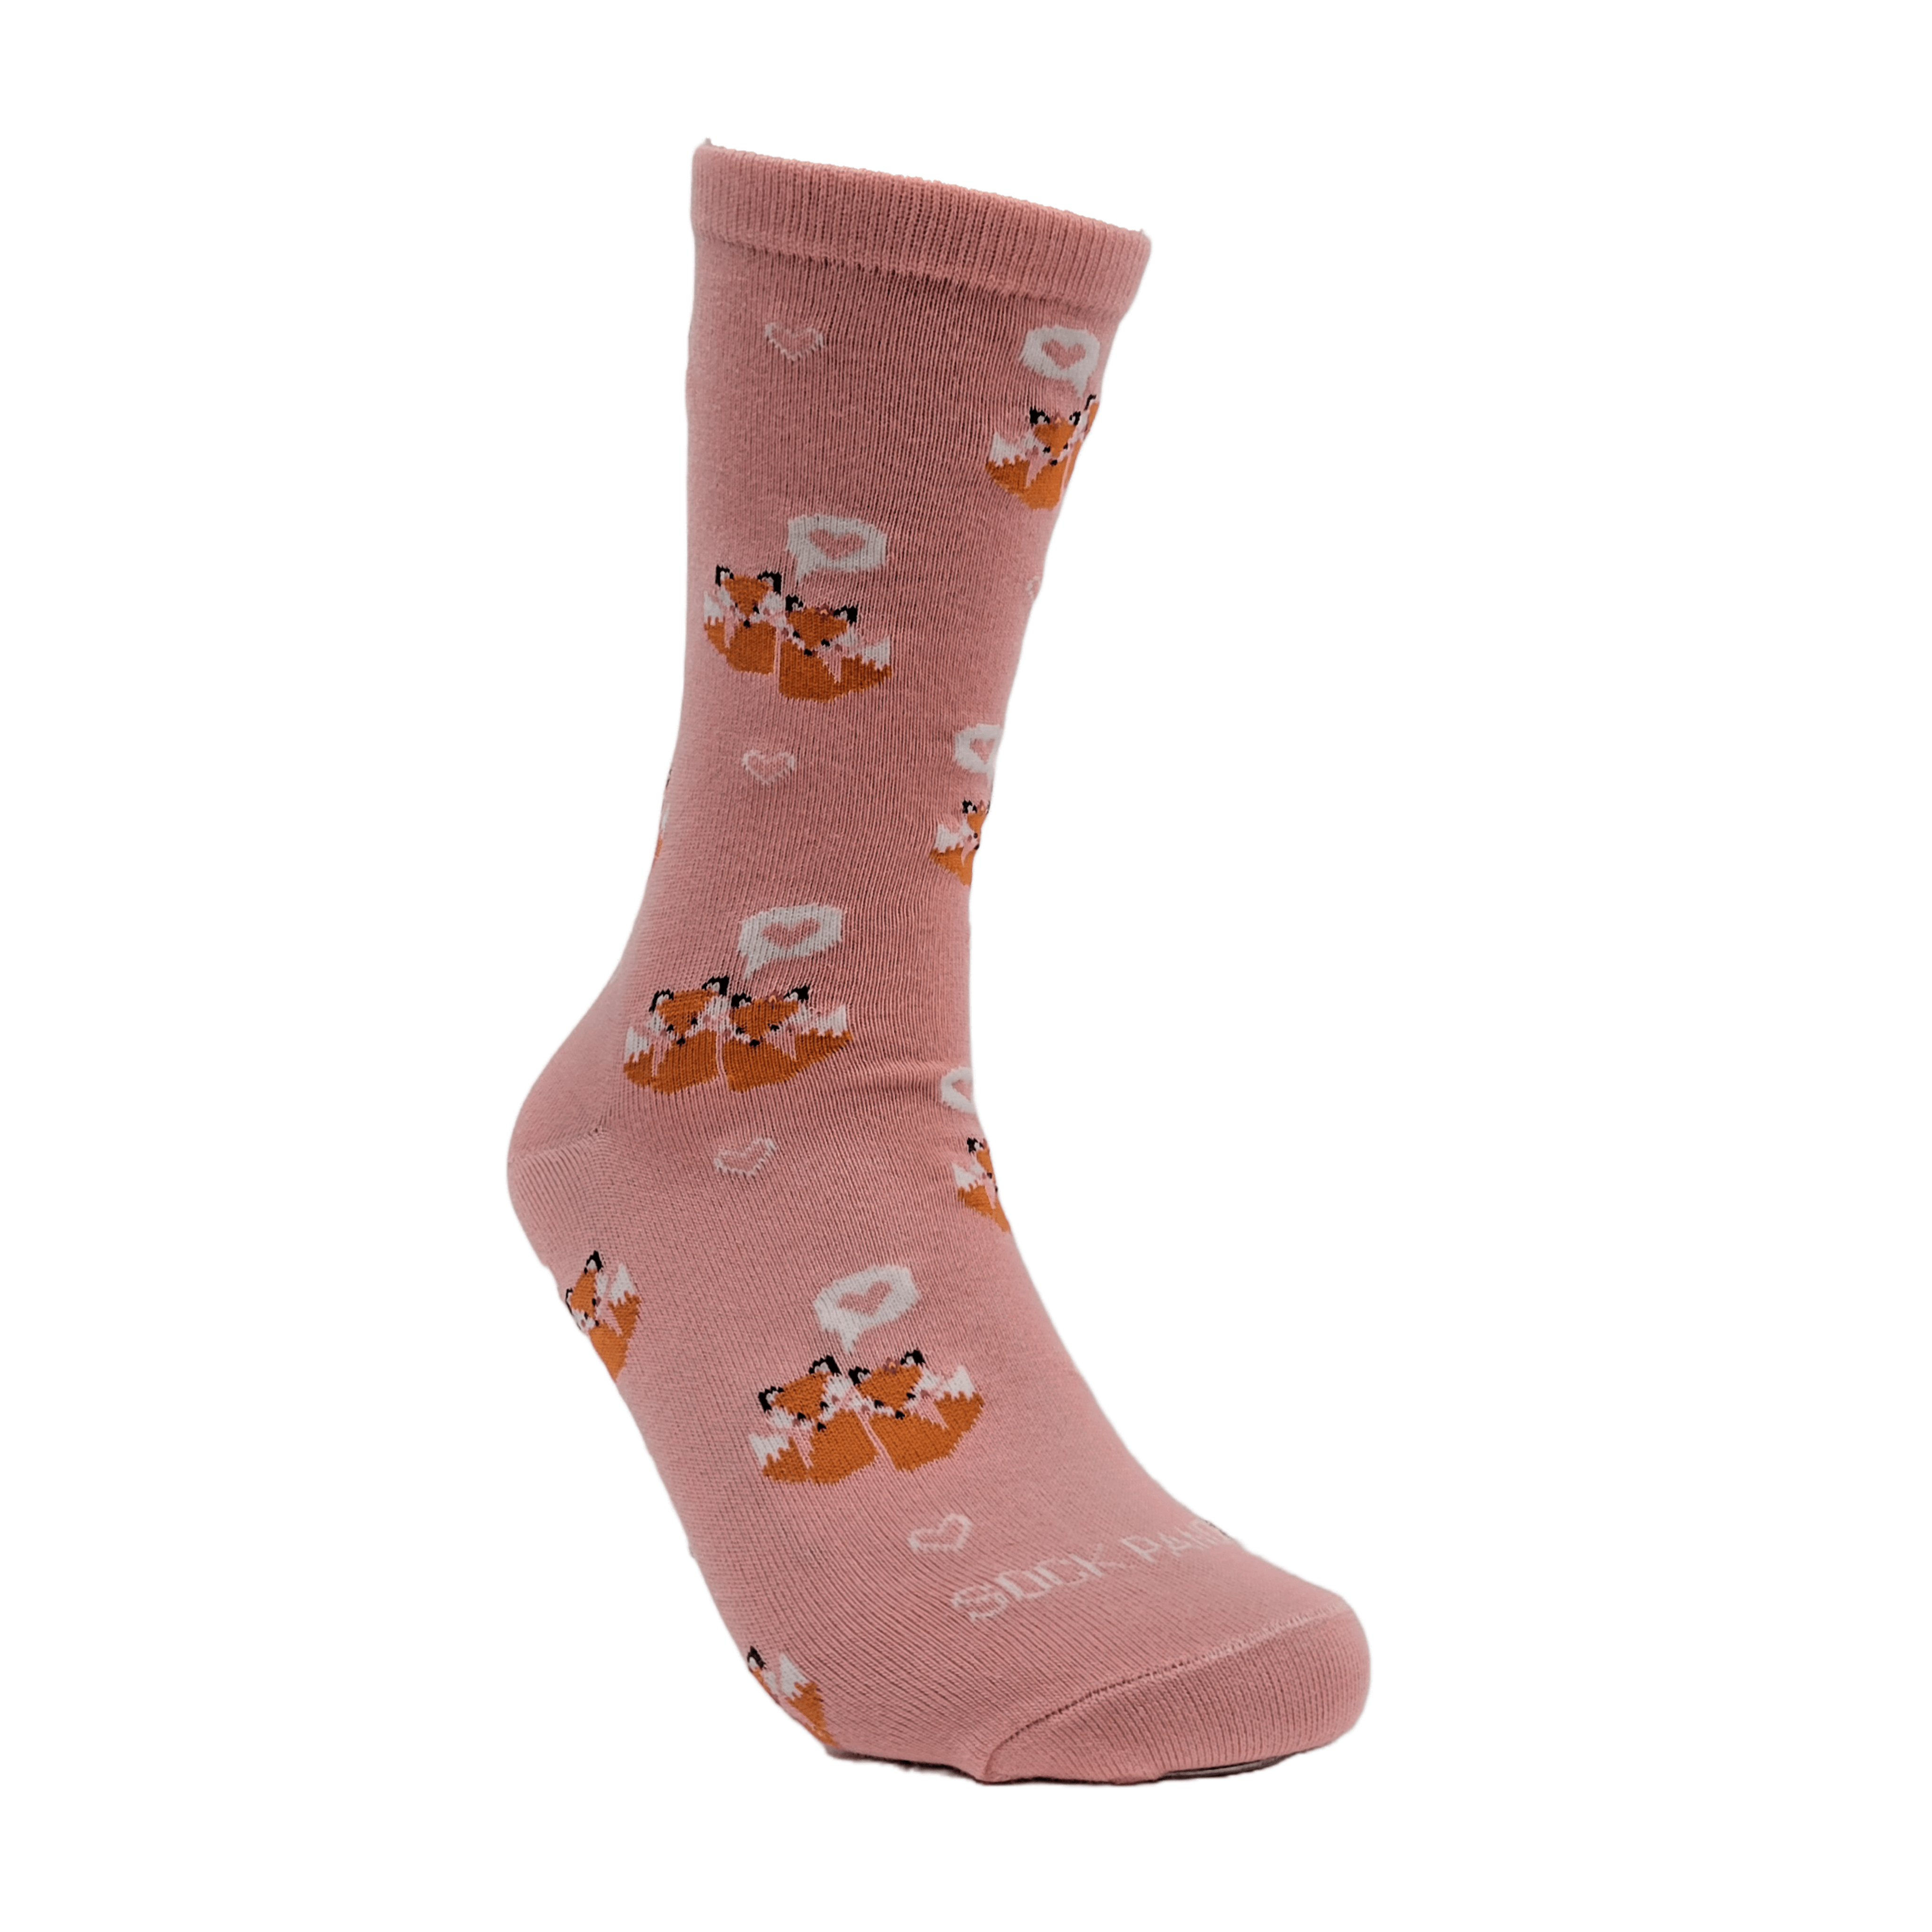 Love Foxes Socks from the Sock Panda (Adult Medium)